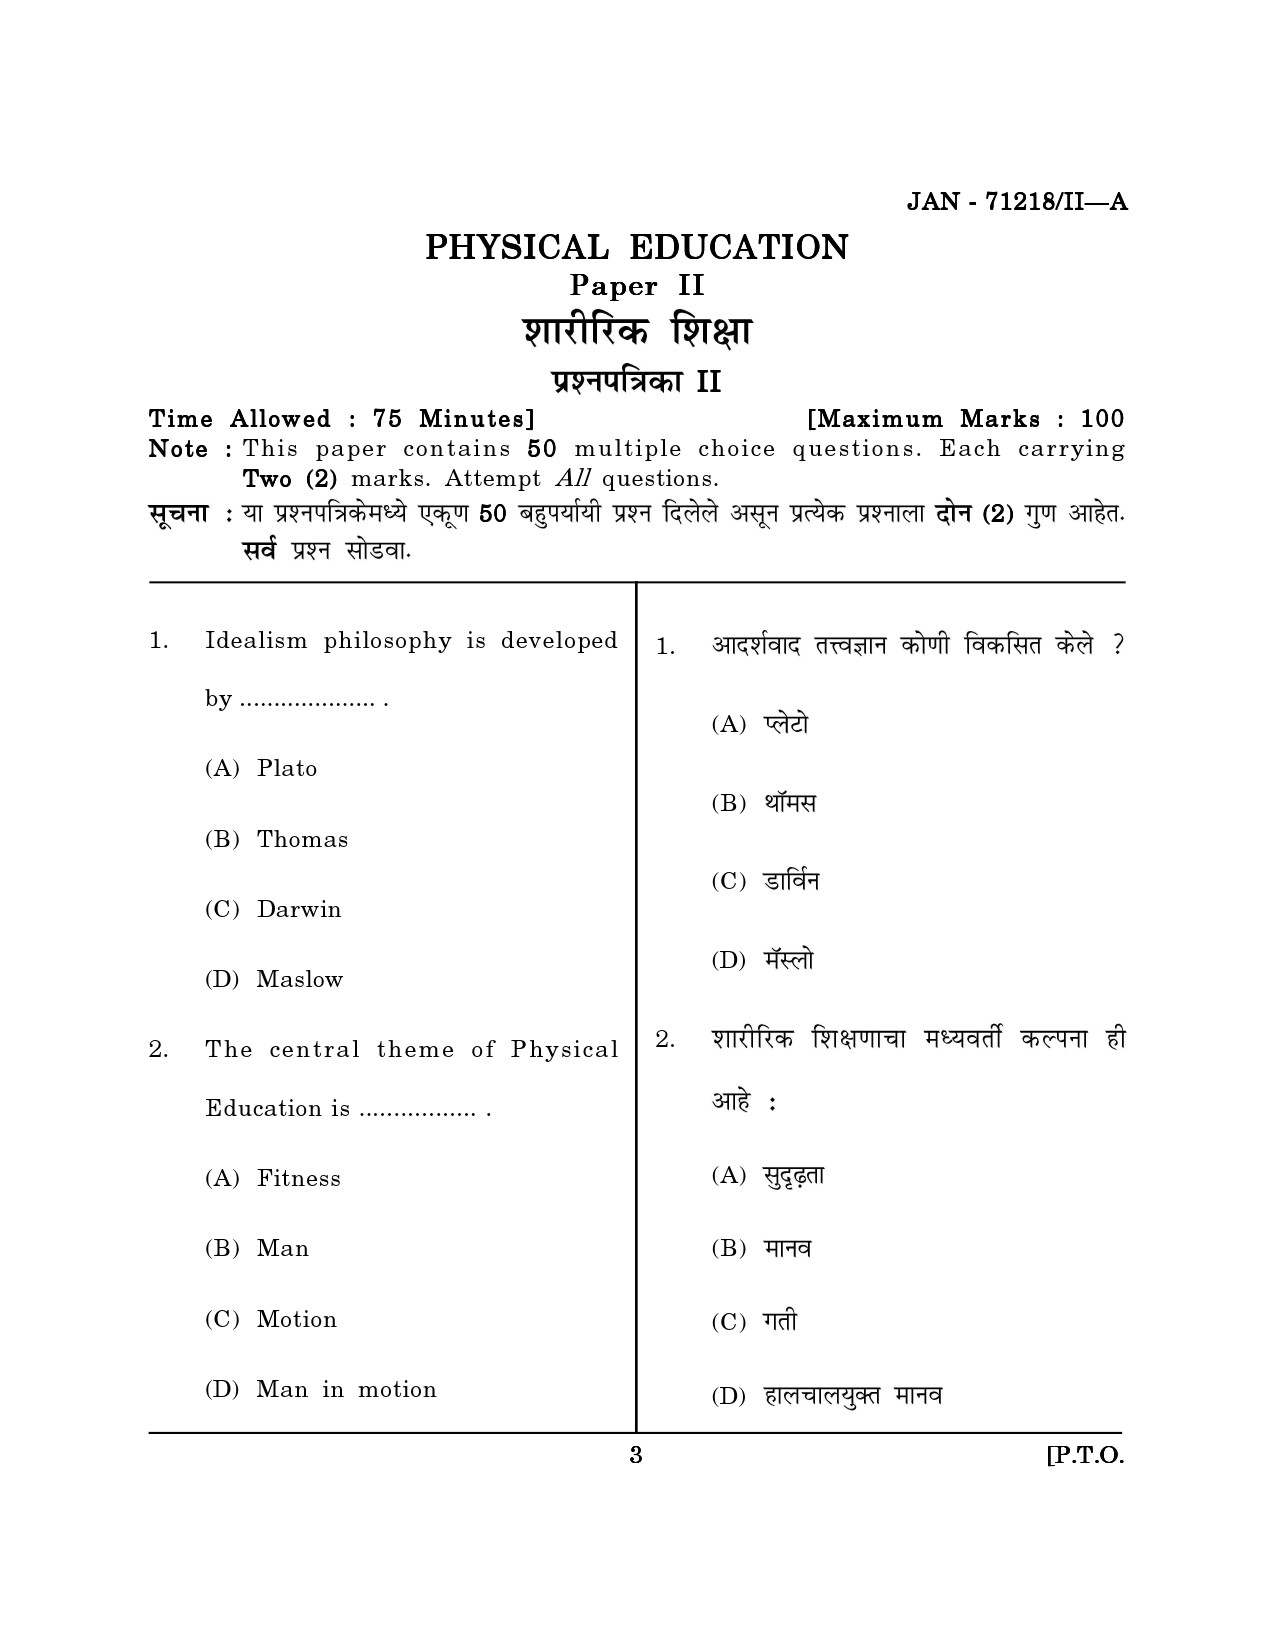 Maharashtra SET Physical Education Question Paper II January 2018 2